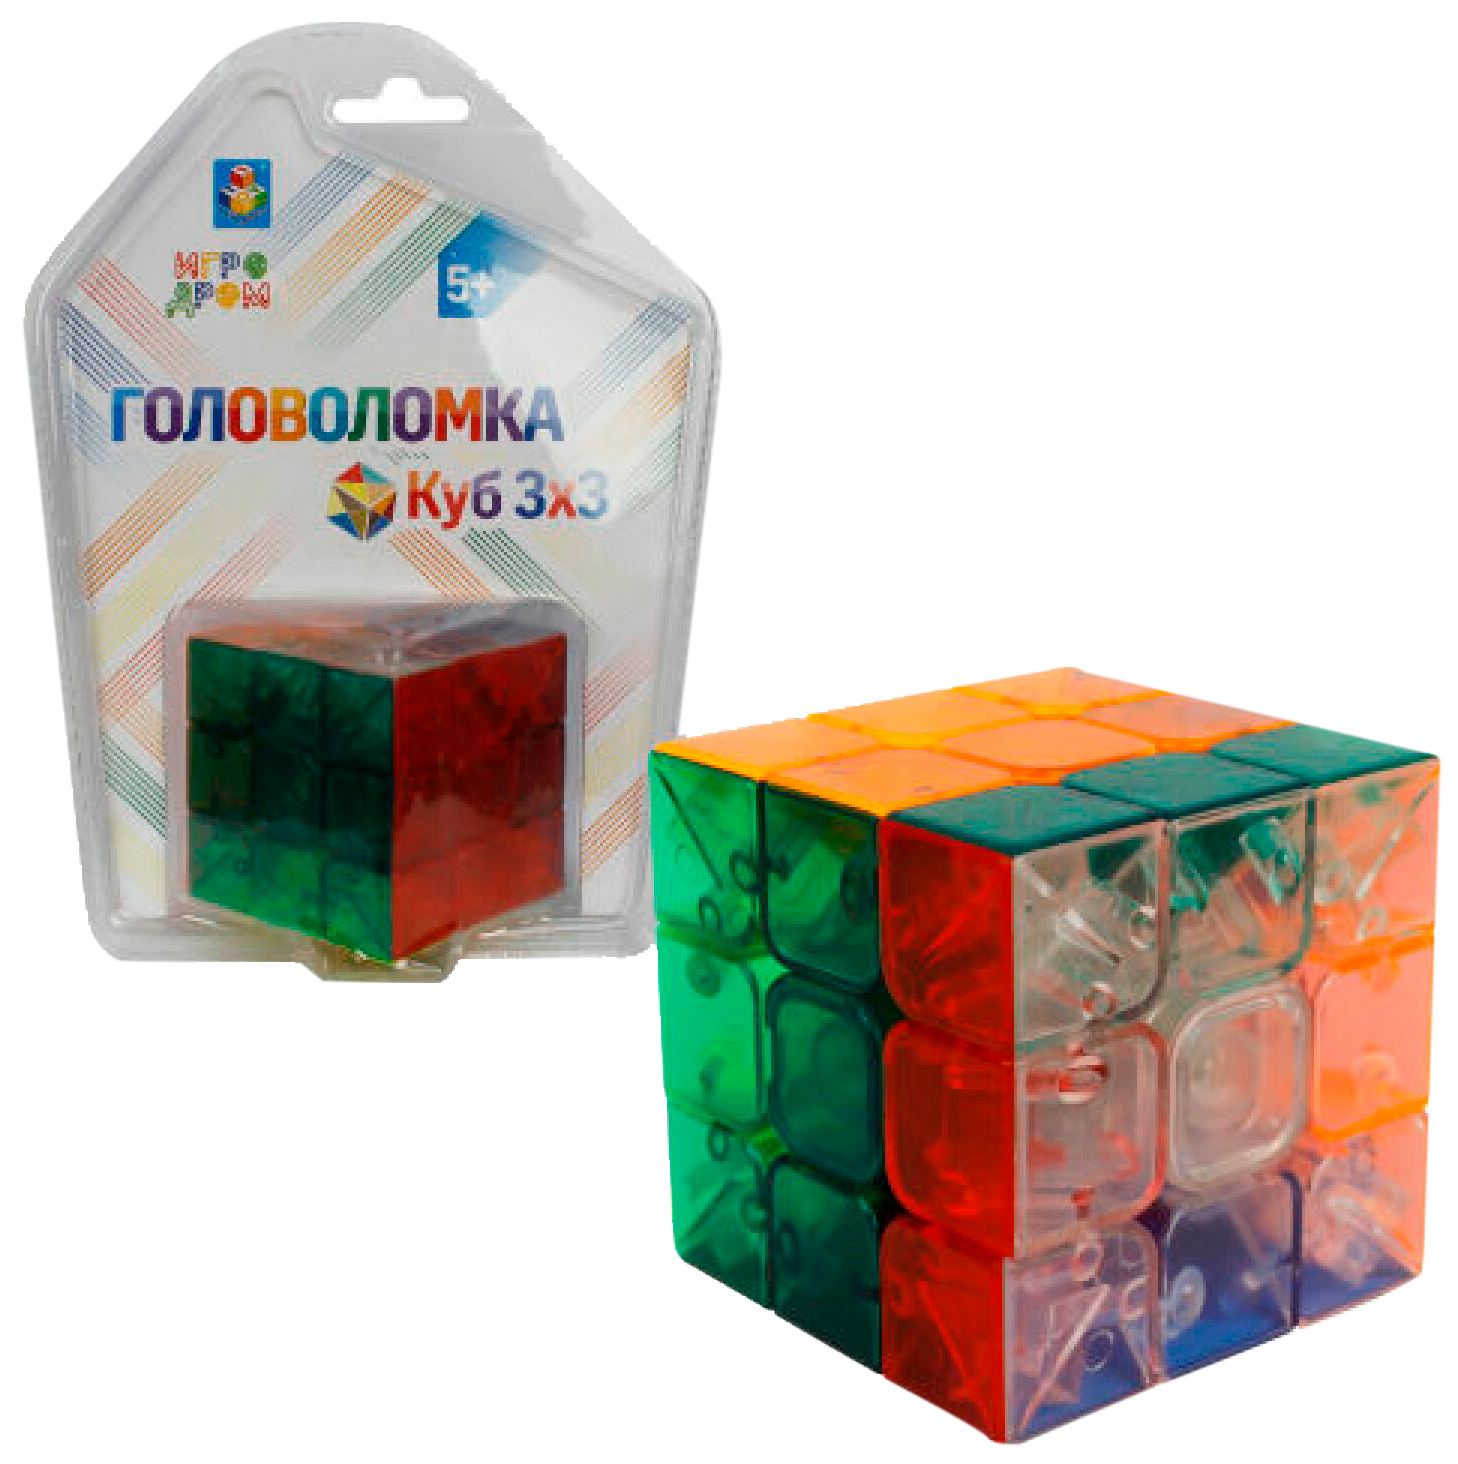 1 TOY Головоломка Куб 3x3, с прозрачными гранями Т14217